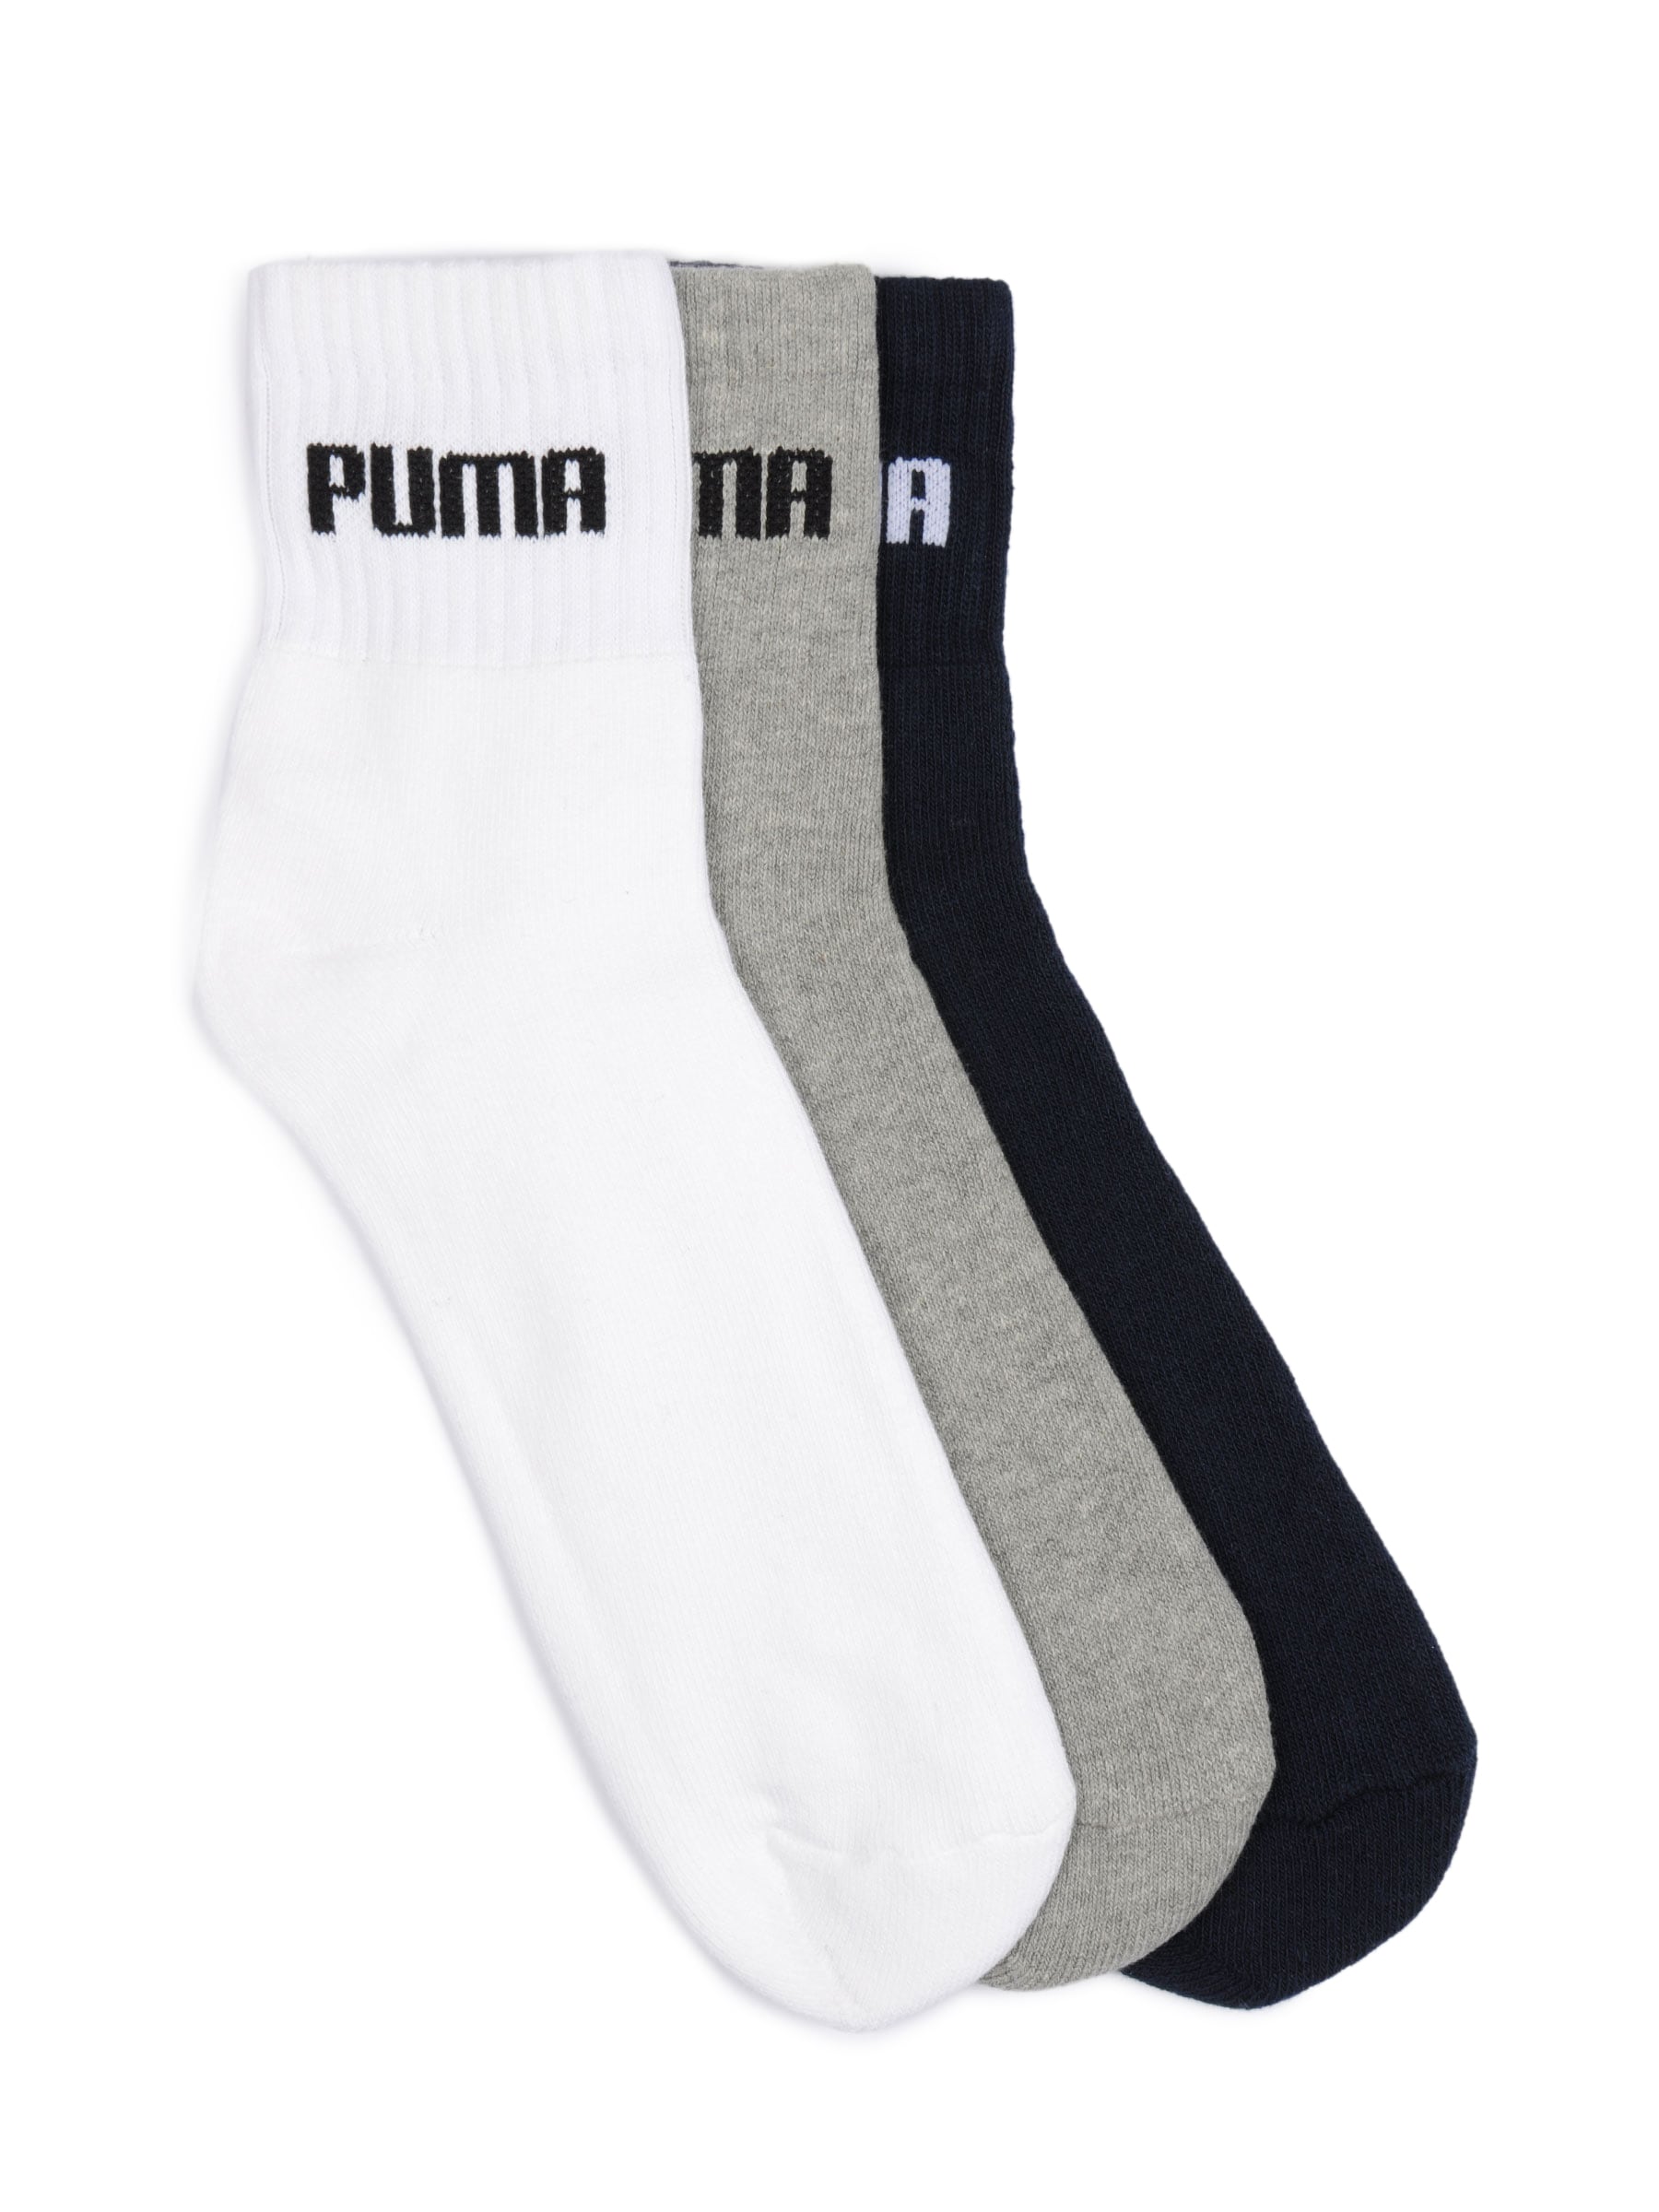 Puma Men Sport Quarters Pack of 3 Socks